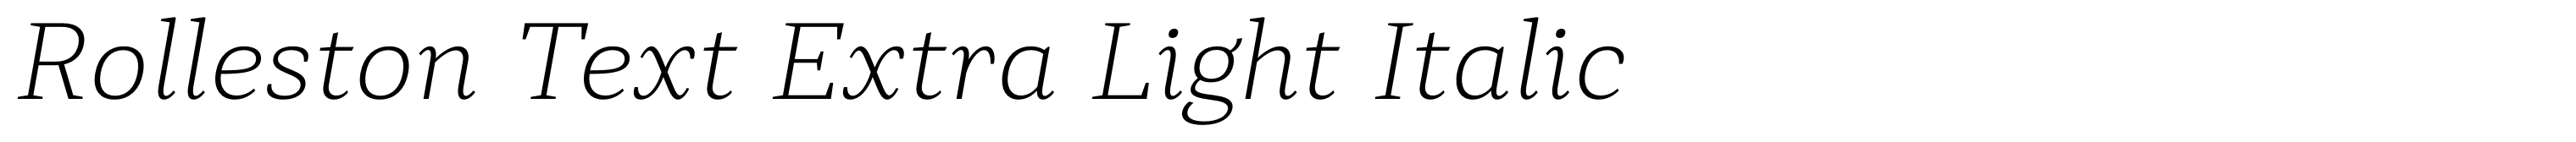 Rolleston Text Extra Light Italic